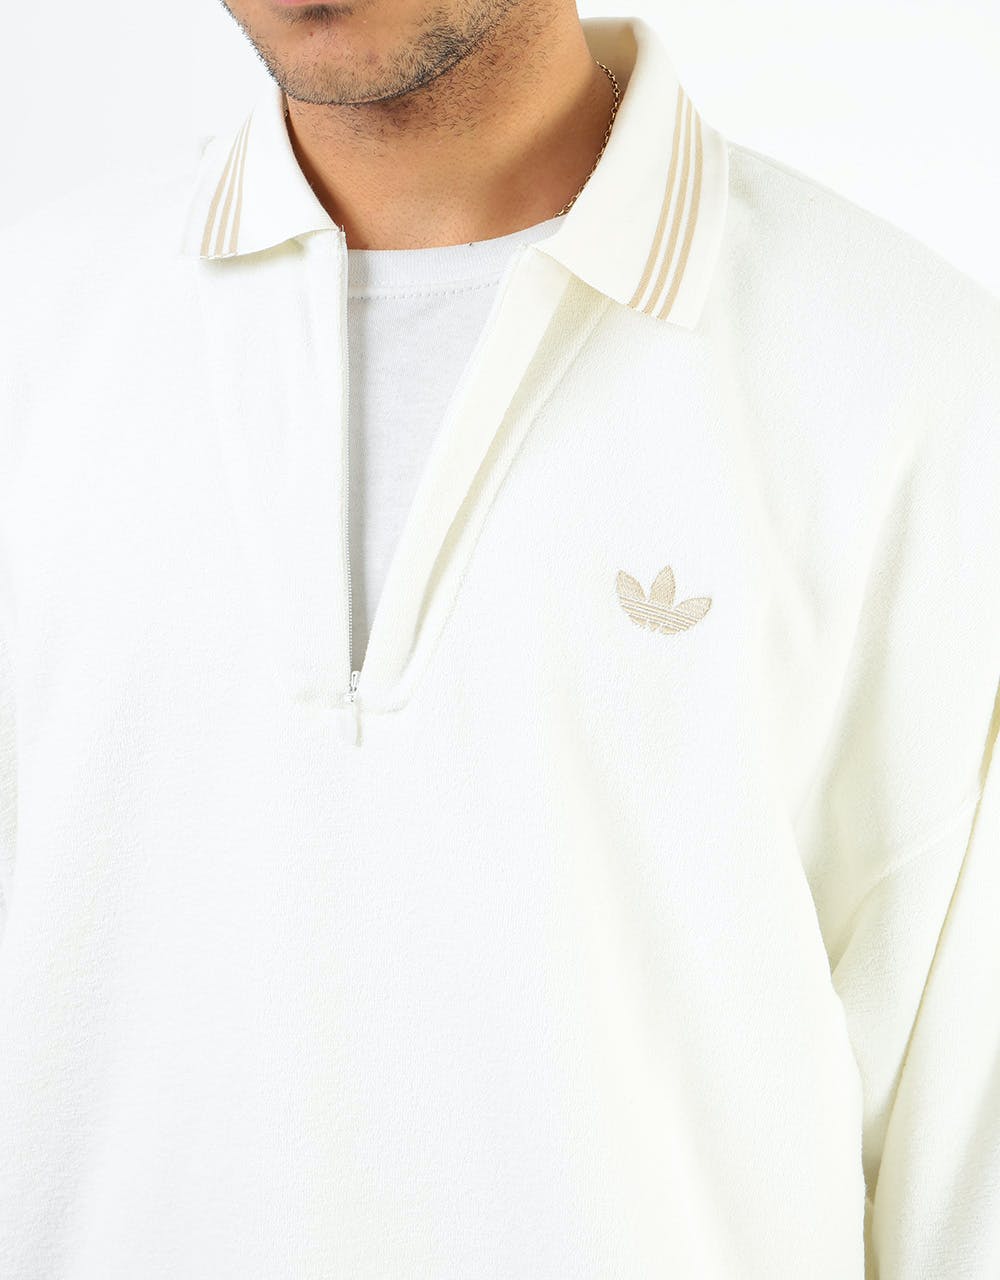 Adidas BCL Shirt - Off White/Savannah